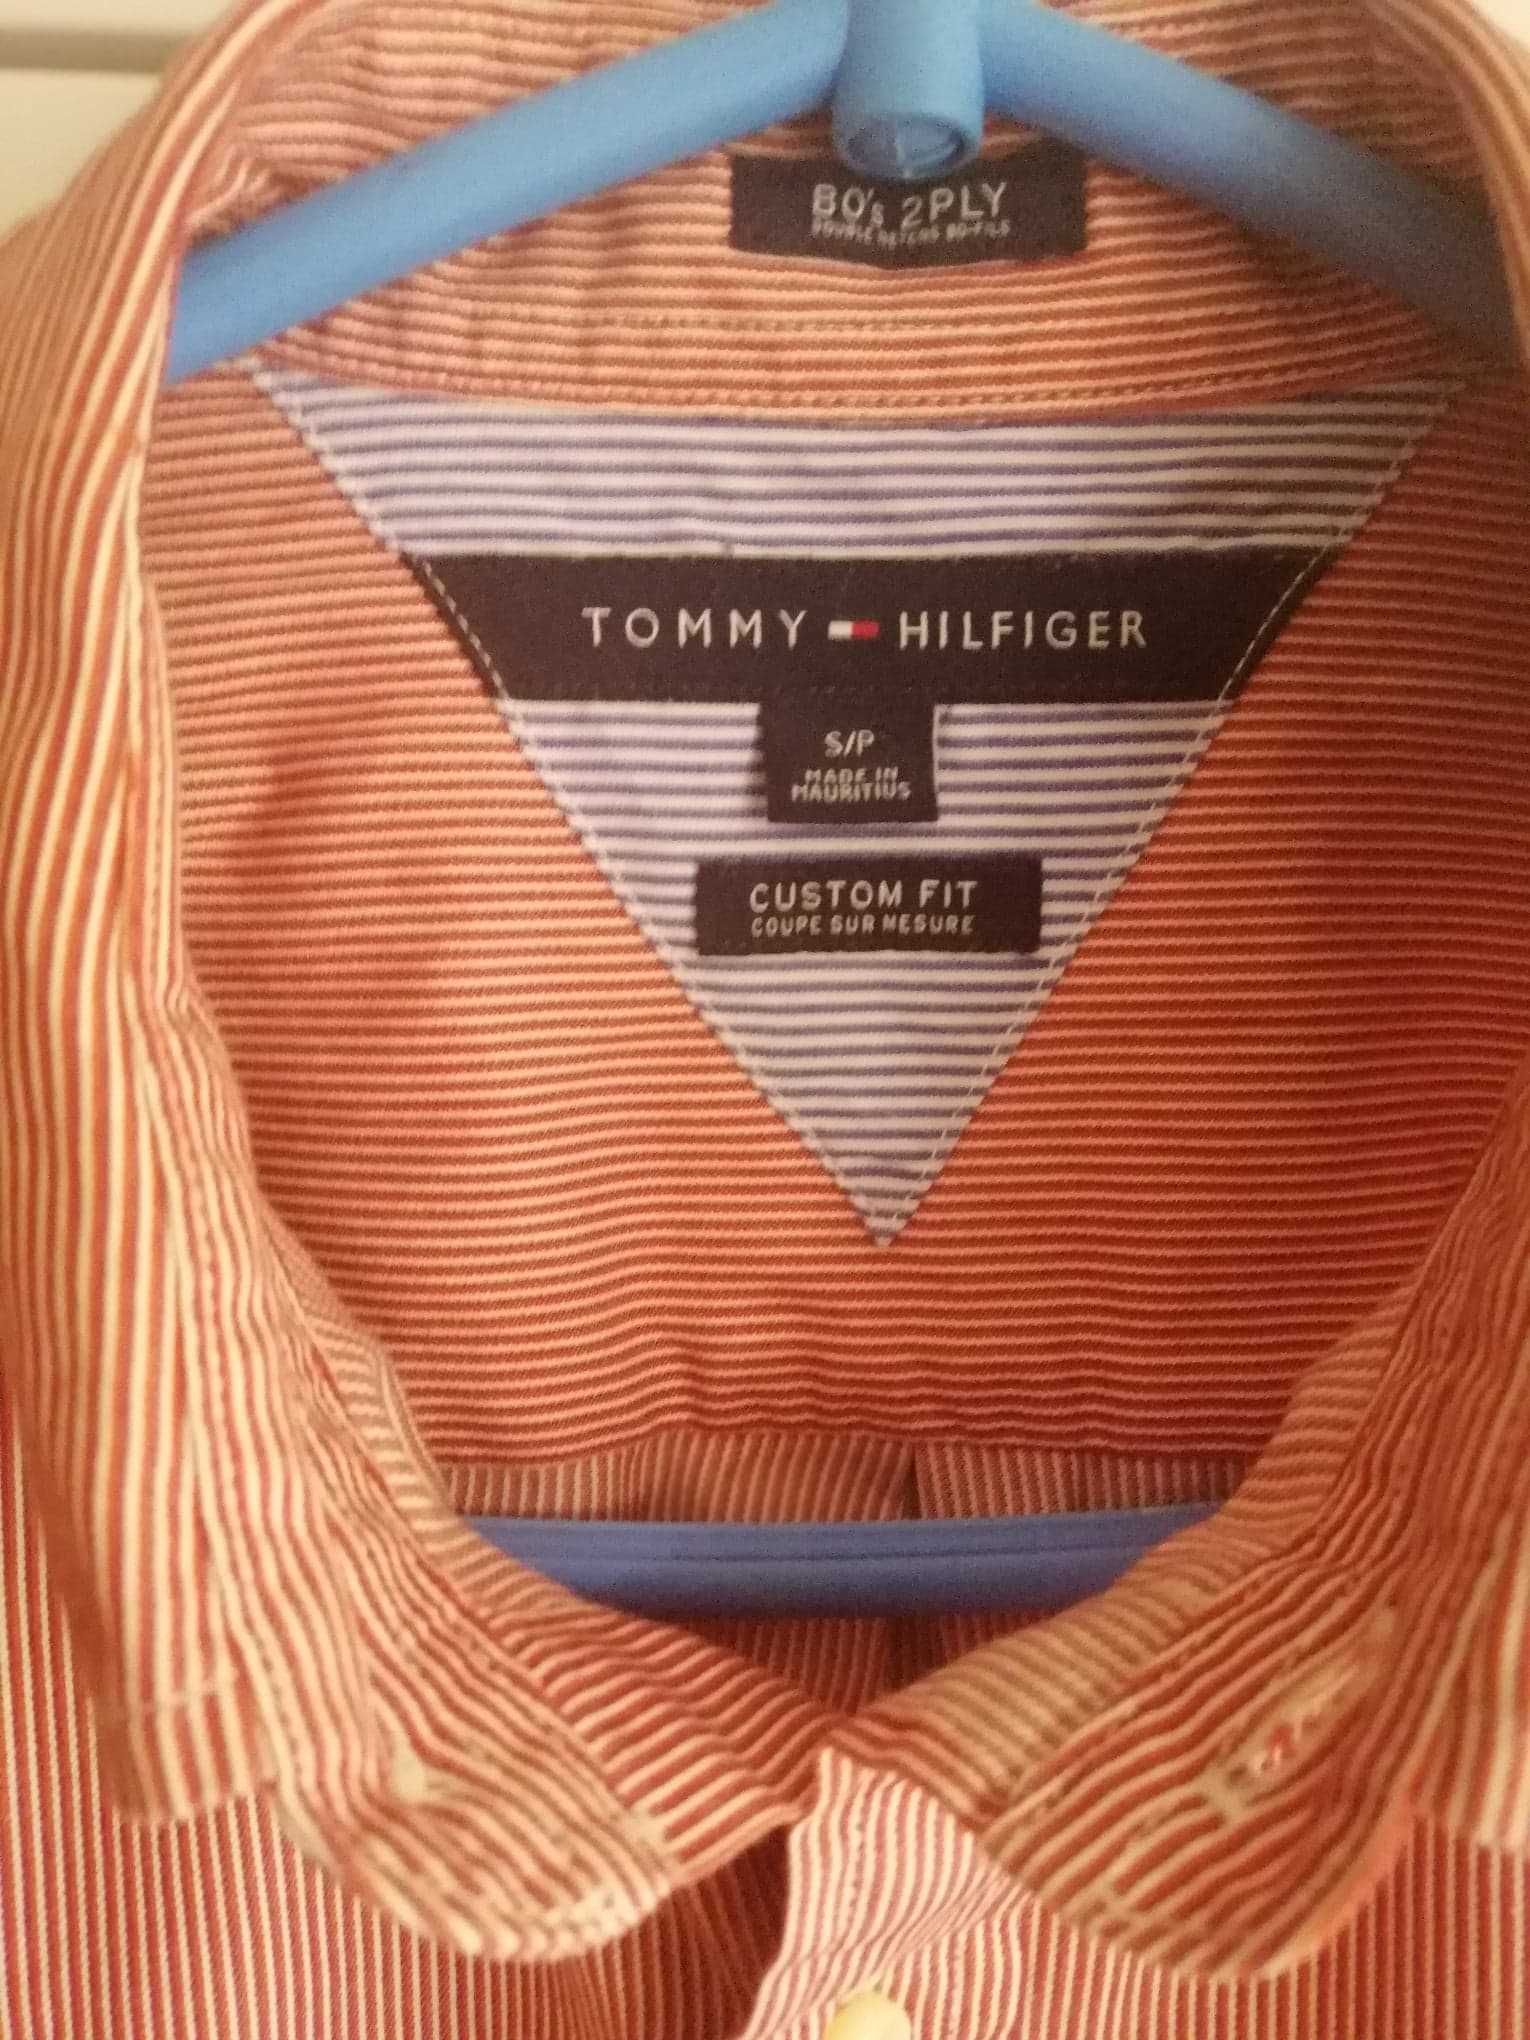 Tommy Hilfiger koszula męska S/P